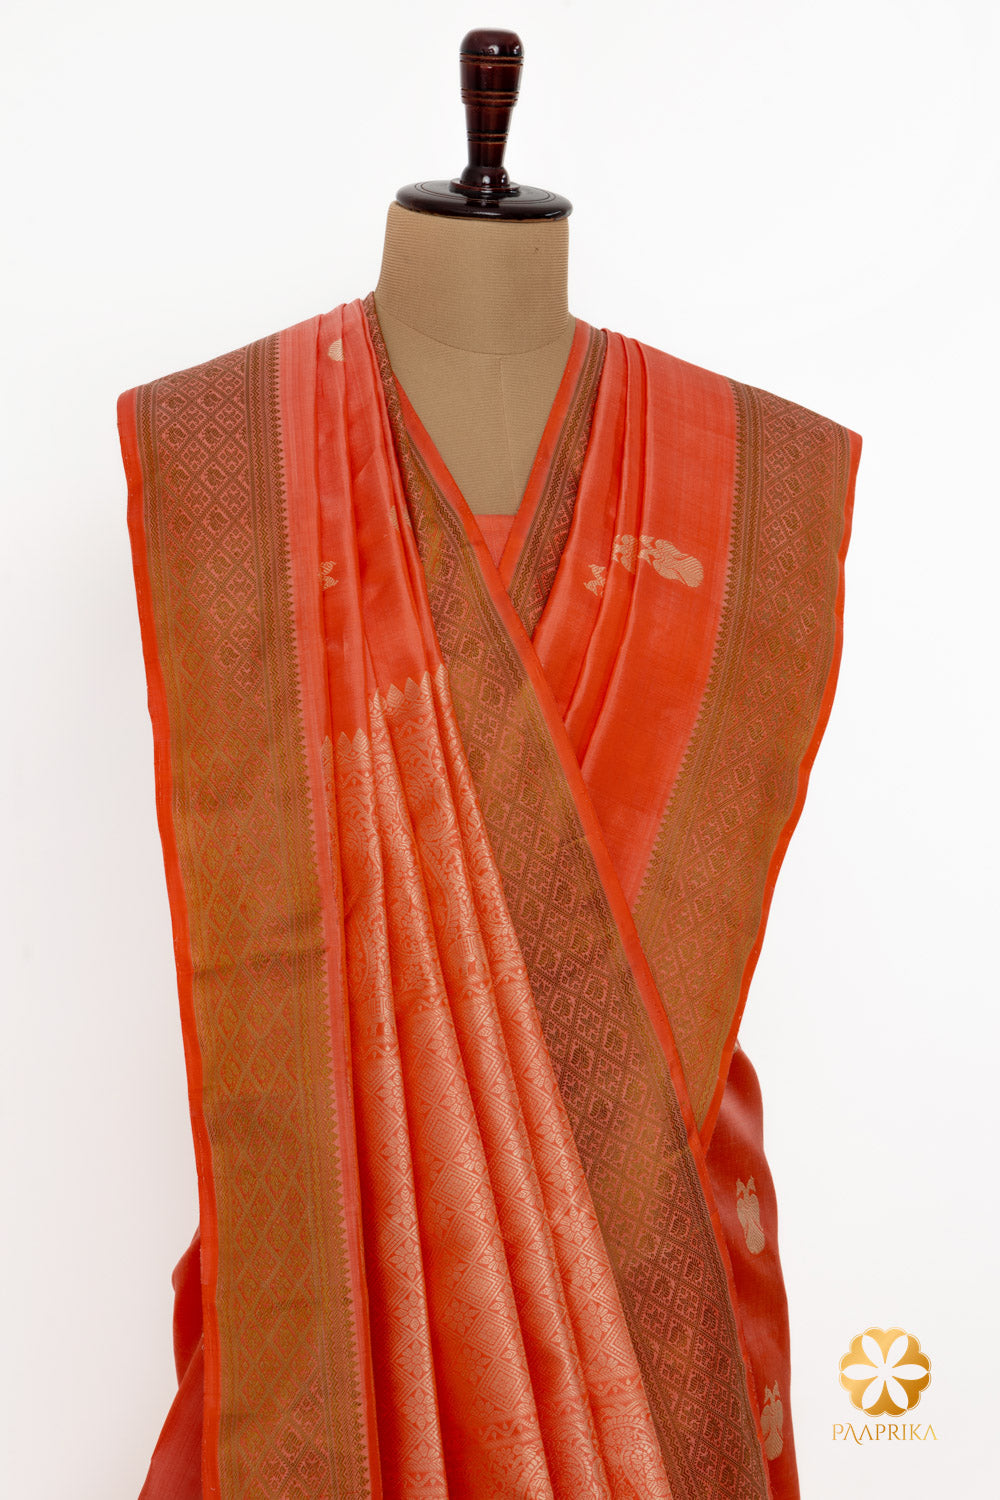 Detailed craftsmanship of Ganda Berunda motifs on a coral silk saree.